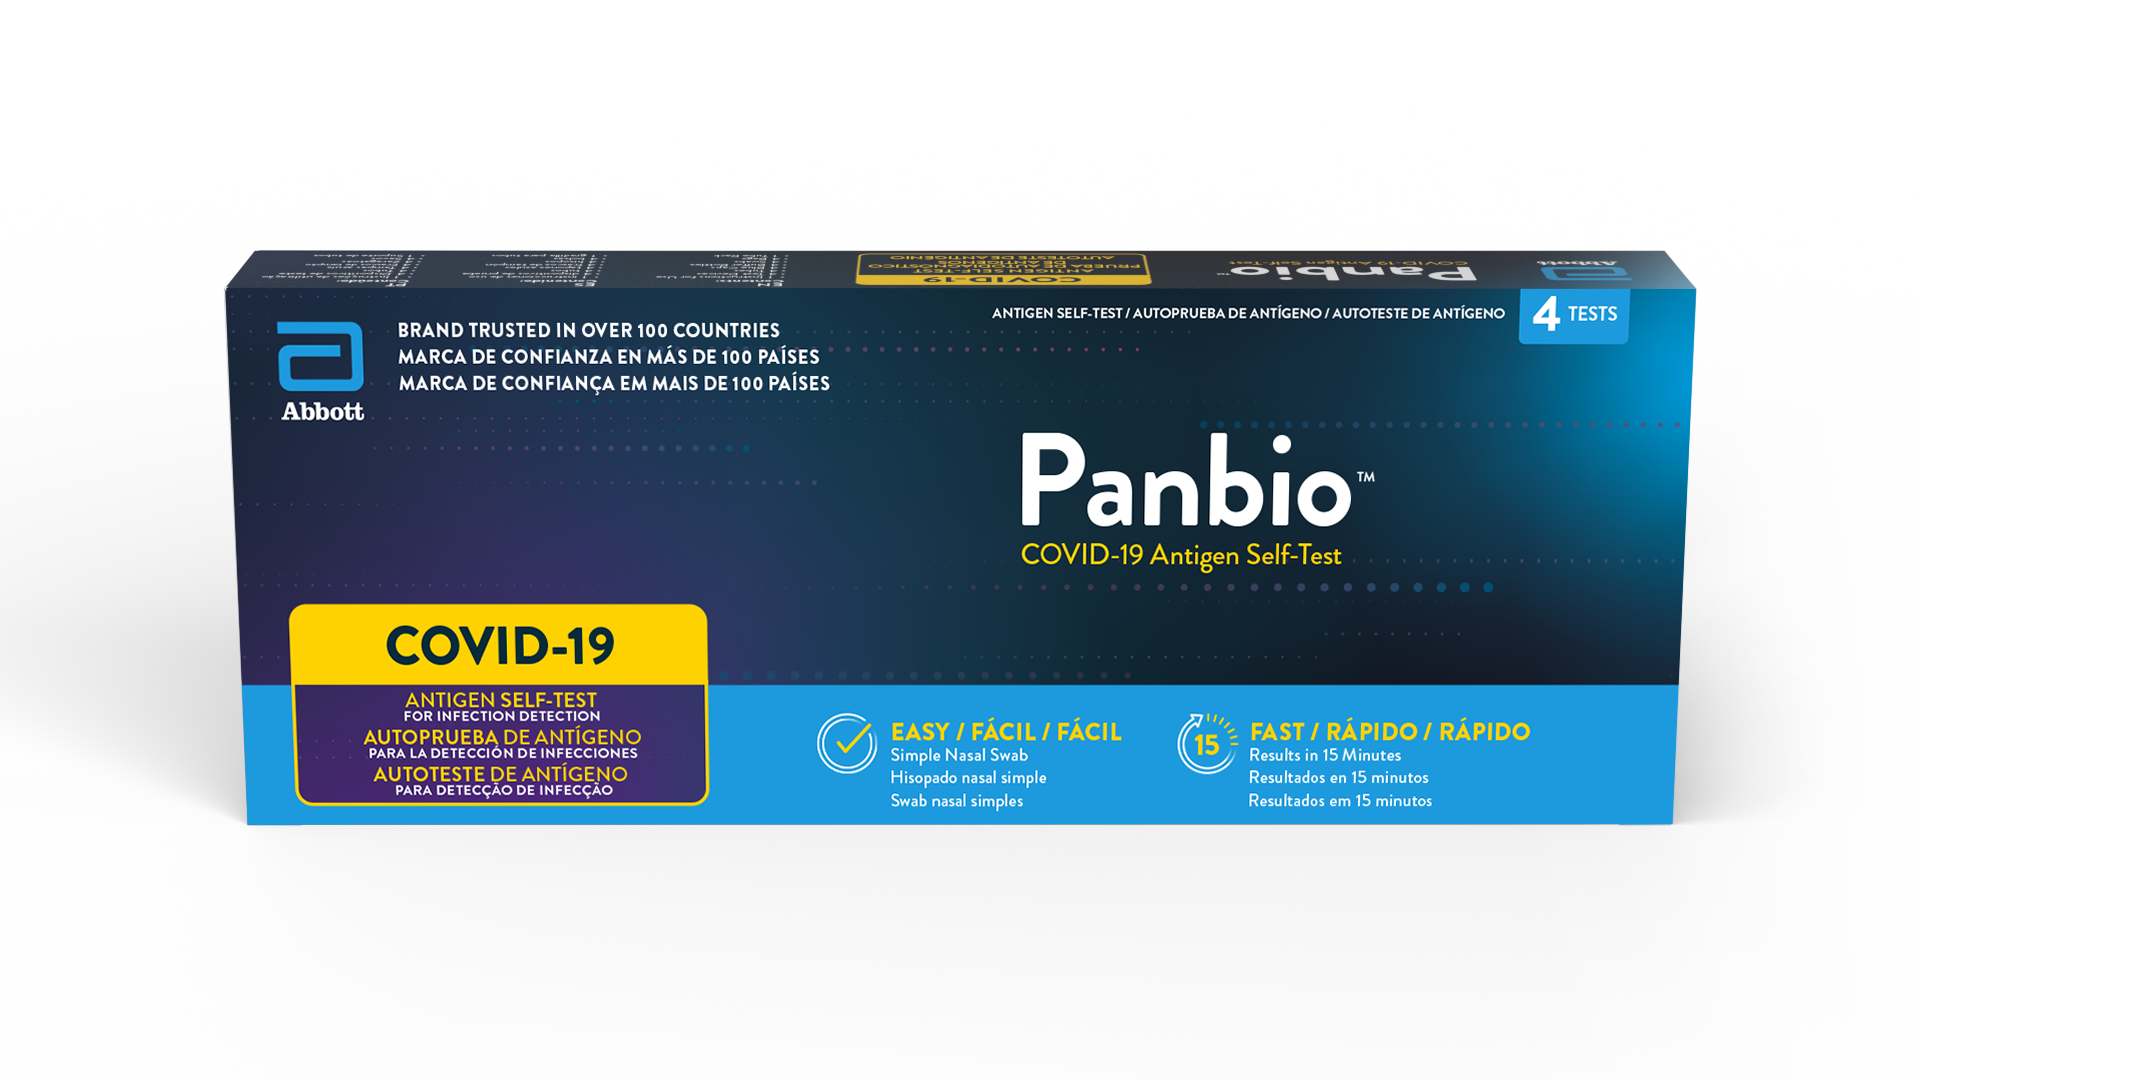 Panbio launch